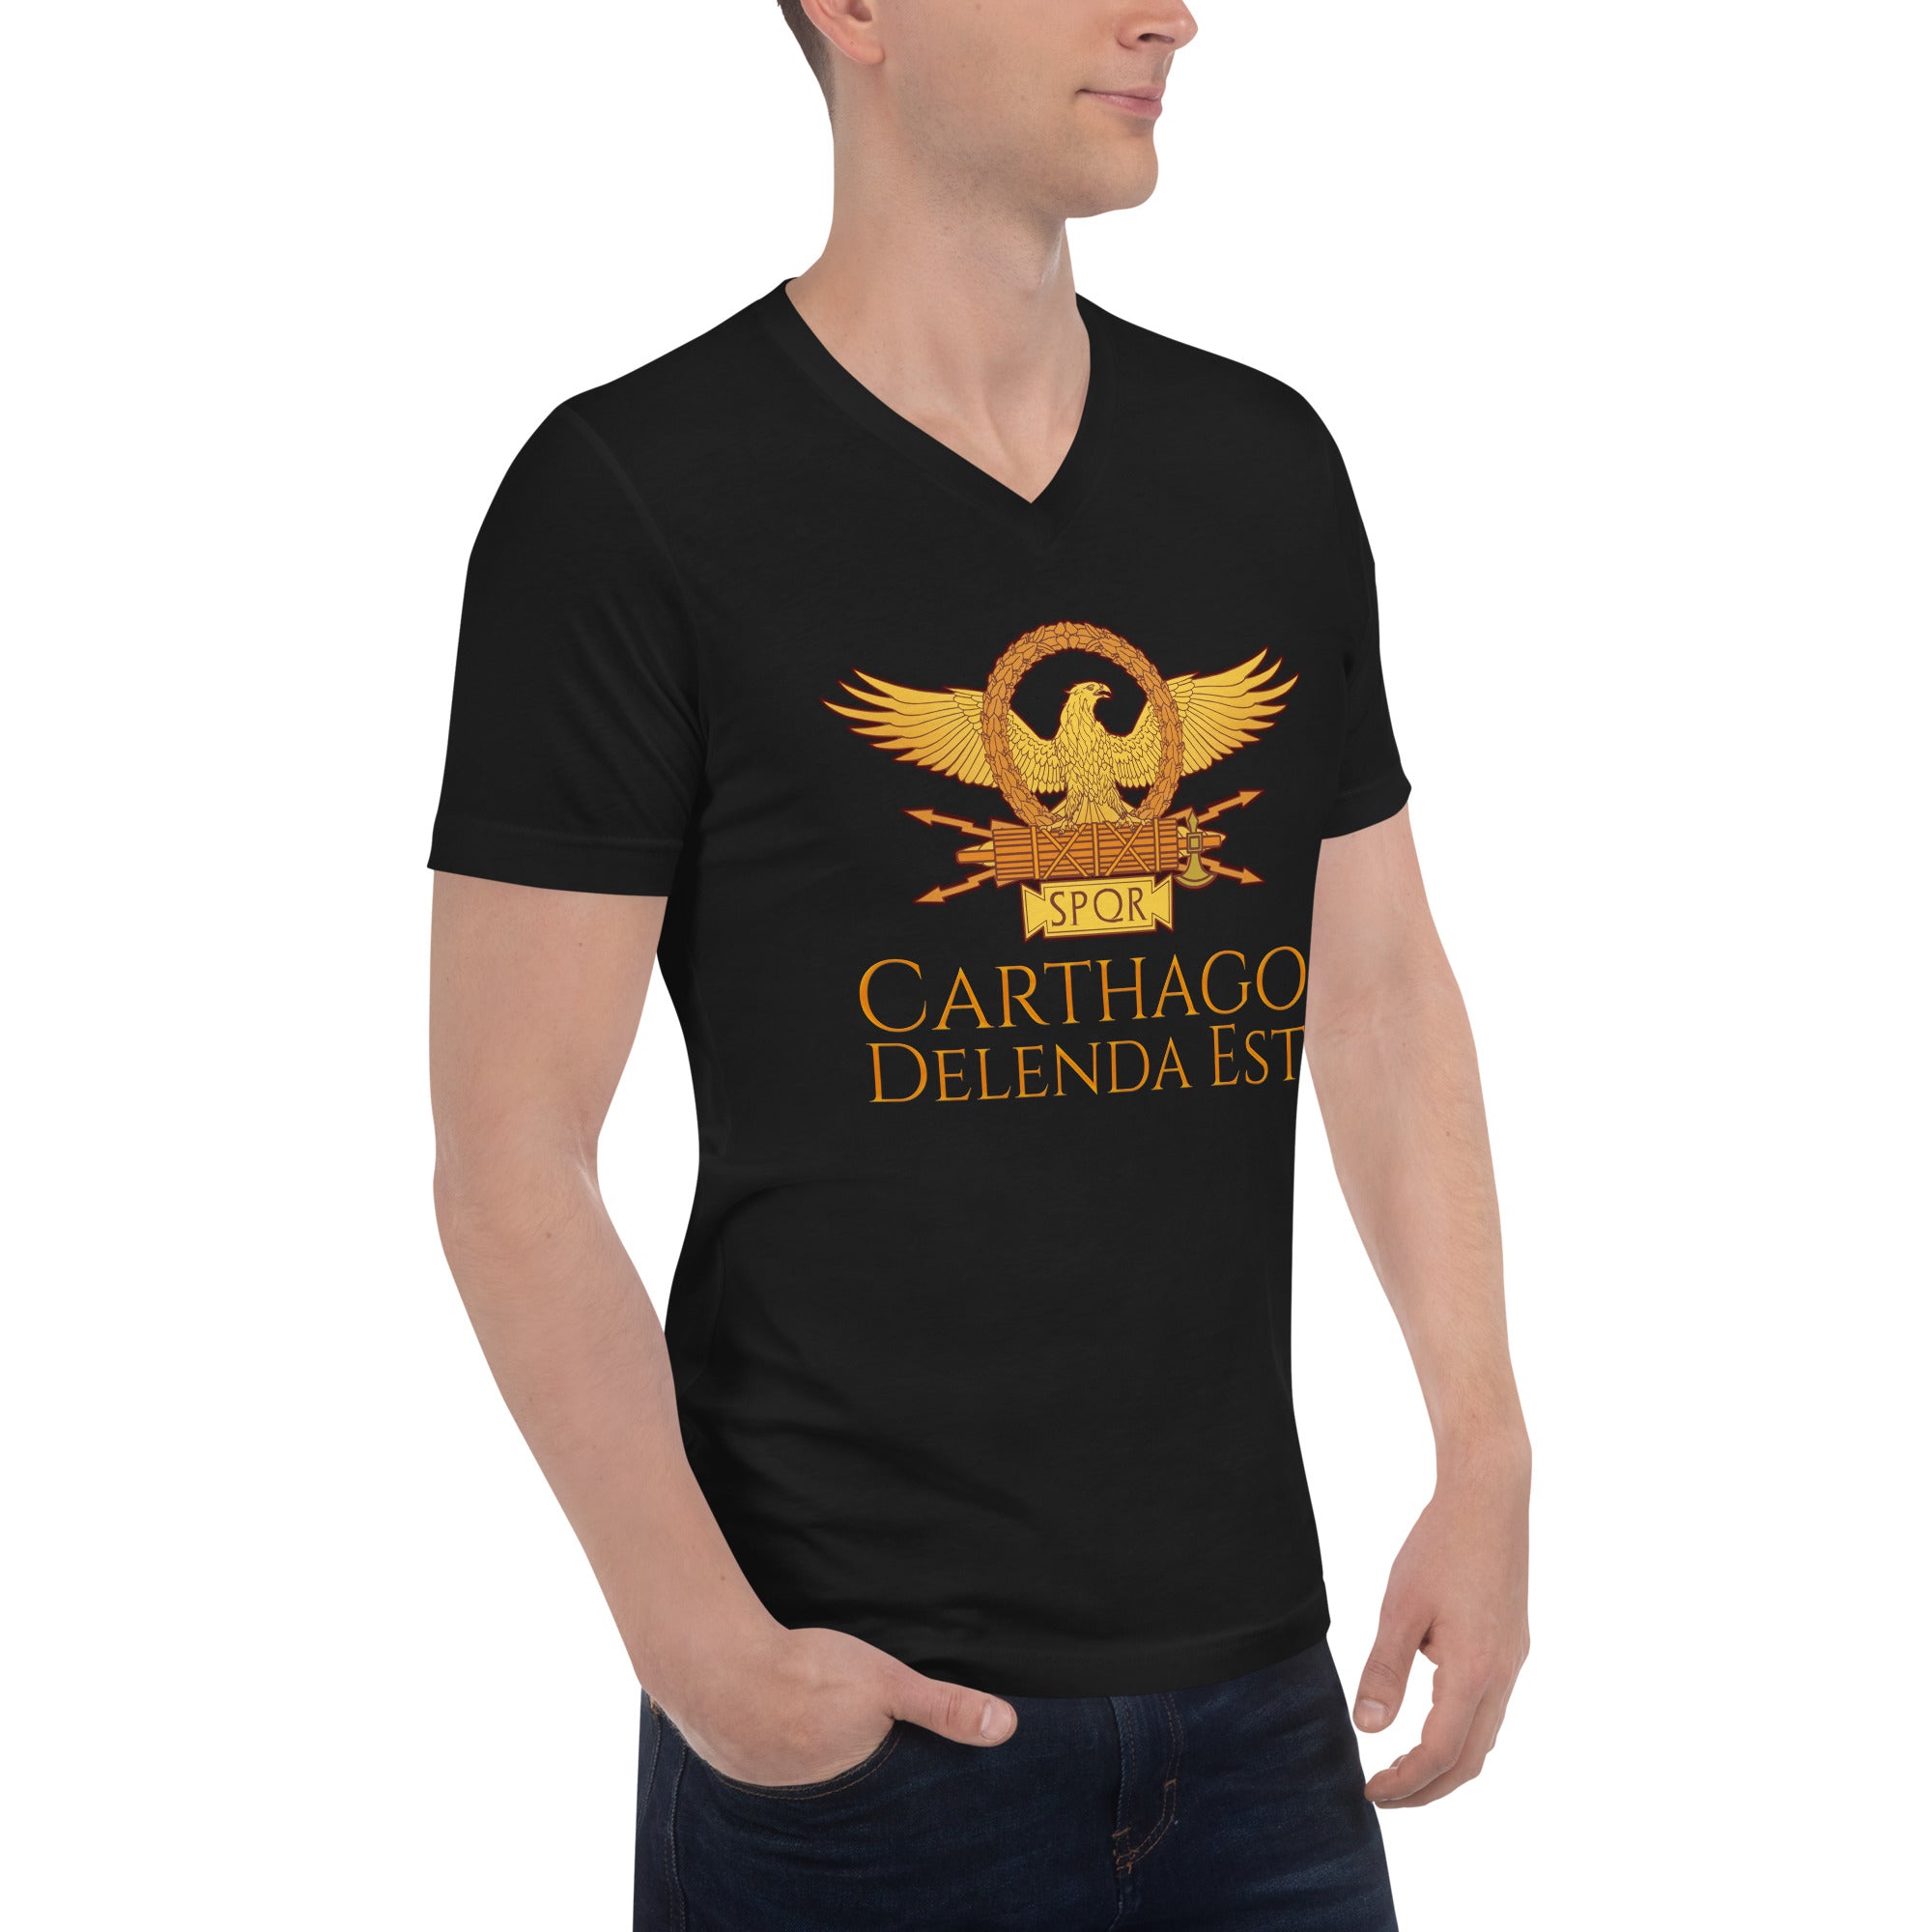 Carthago Delenda Est - Ancient Rome - Unisex Short Sleeve V-Neck T-Shirt